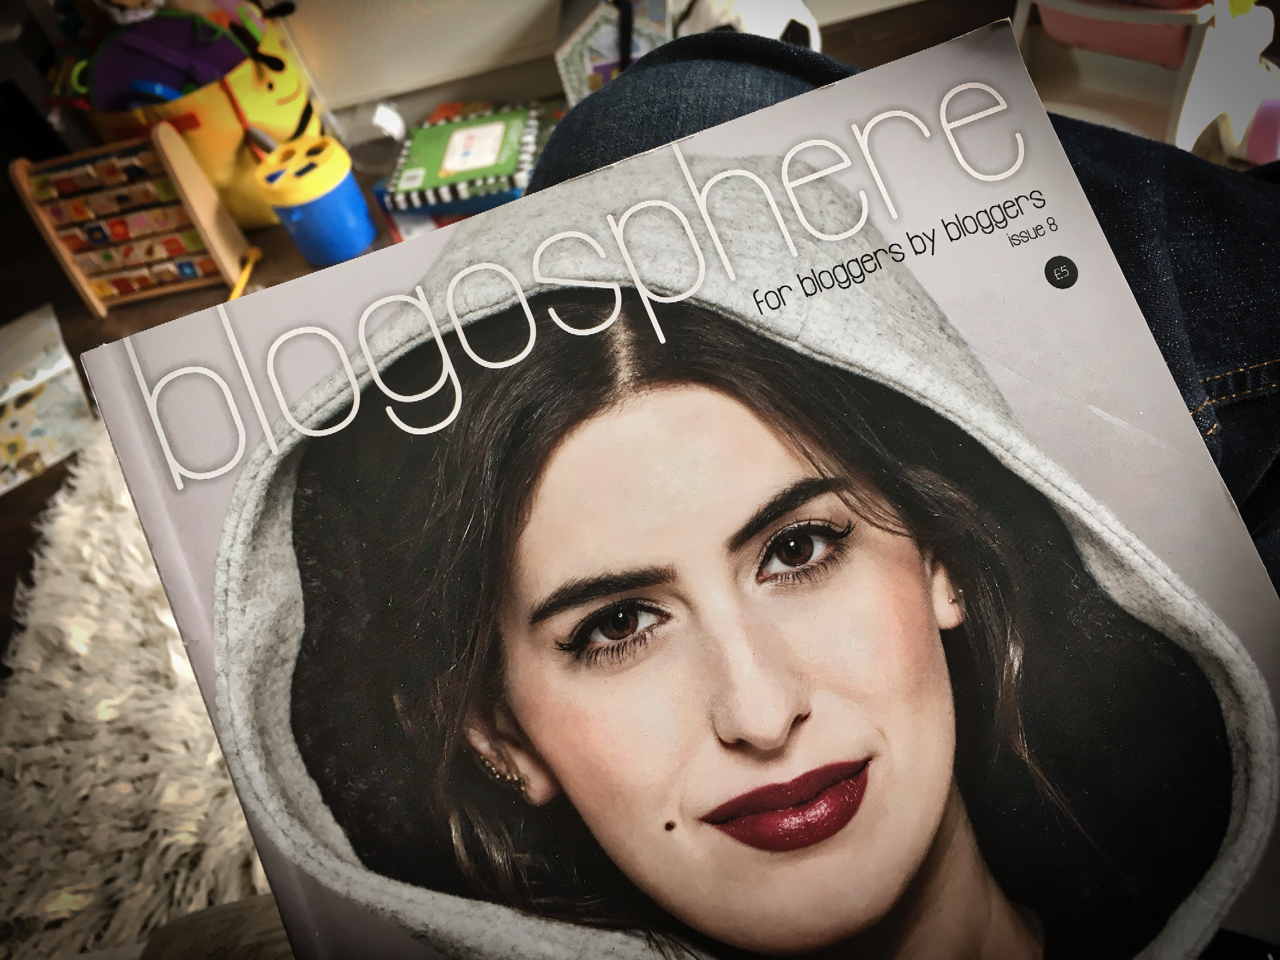 Blogosphere magazine: last decade's jargon on today's newsstands